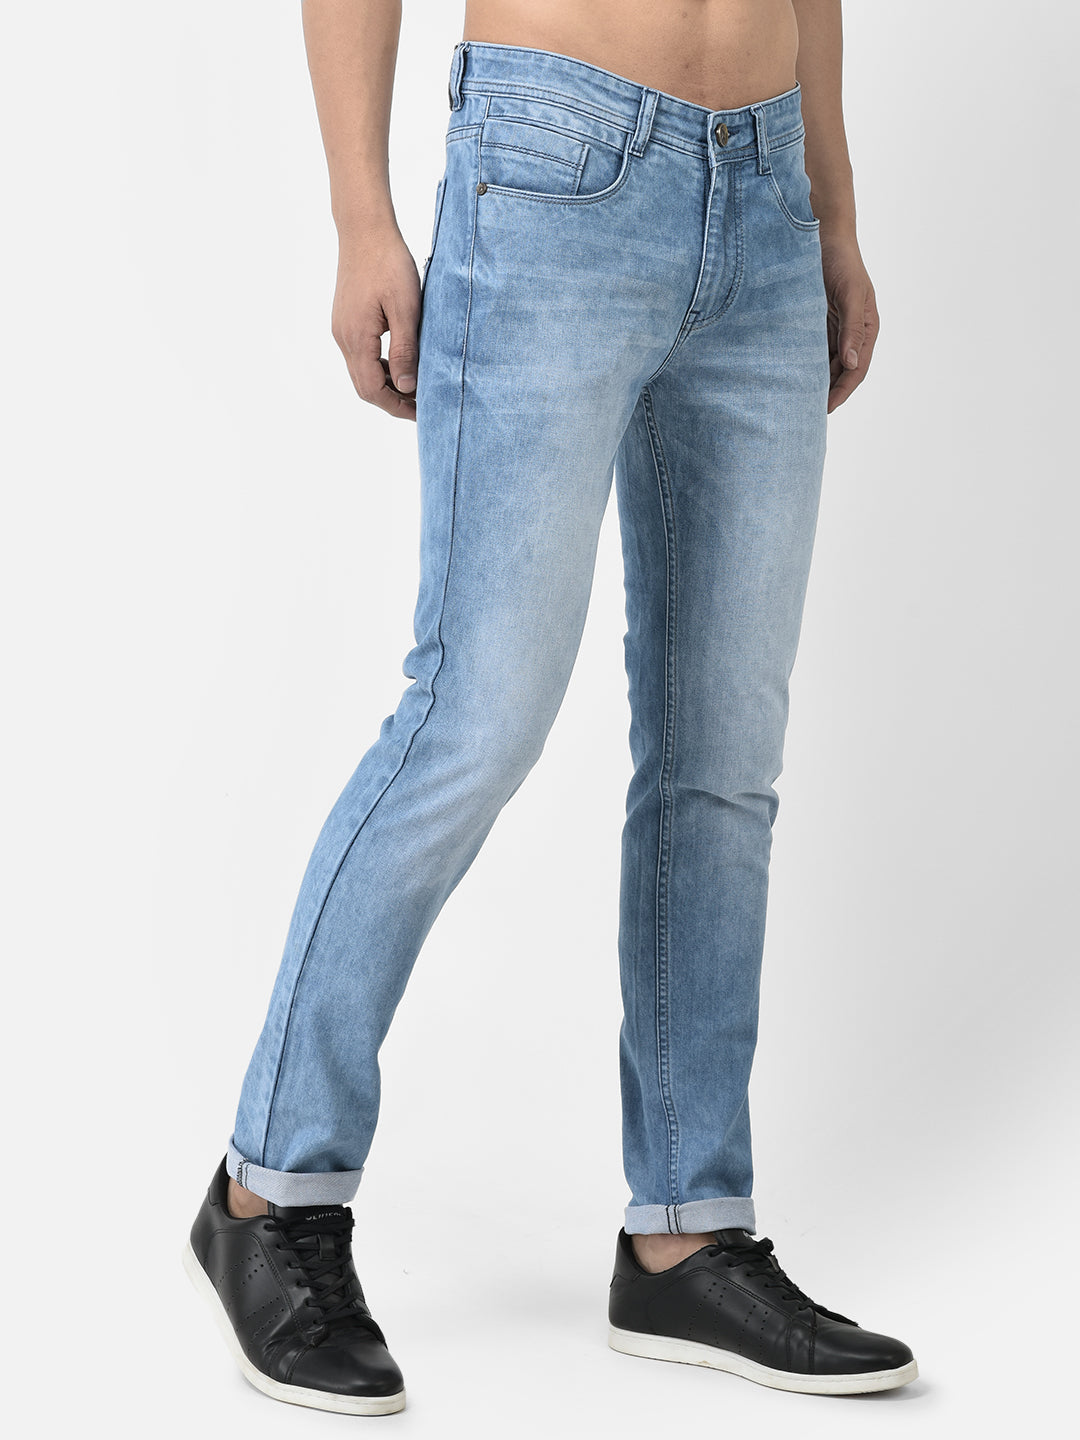 Cobb Sky Blue Narrow Fit Jeans